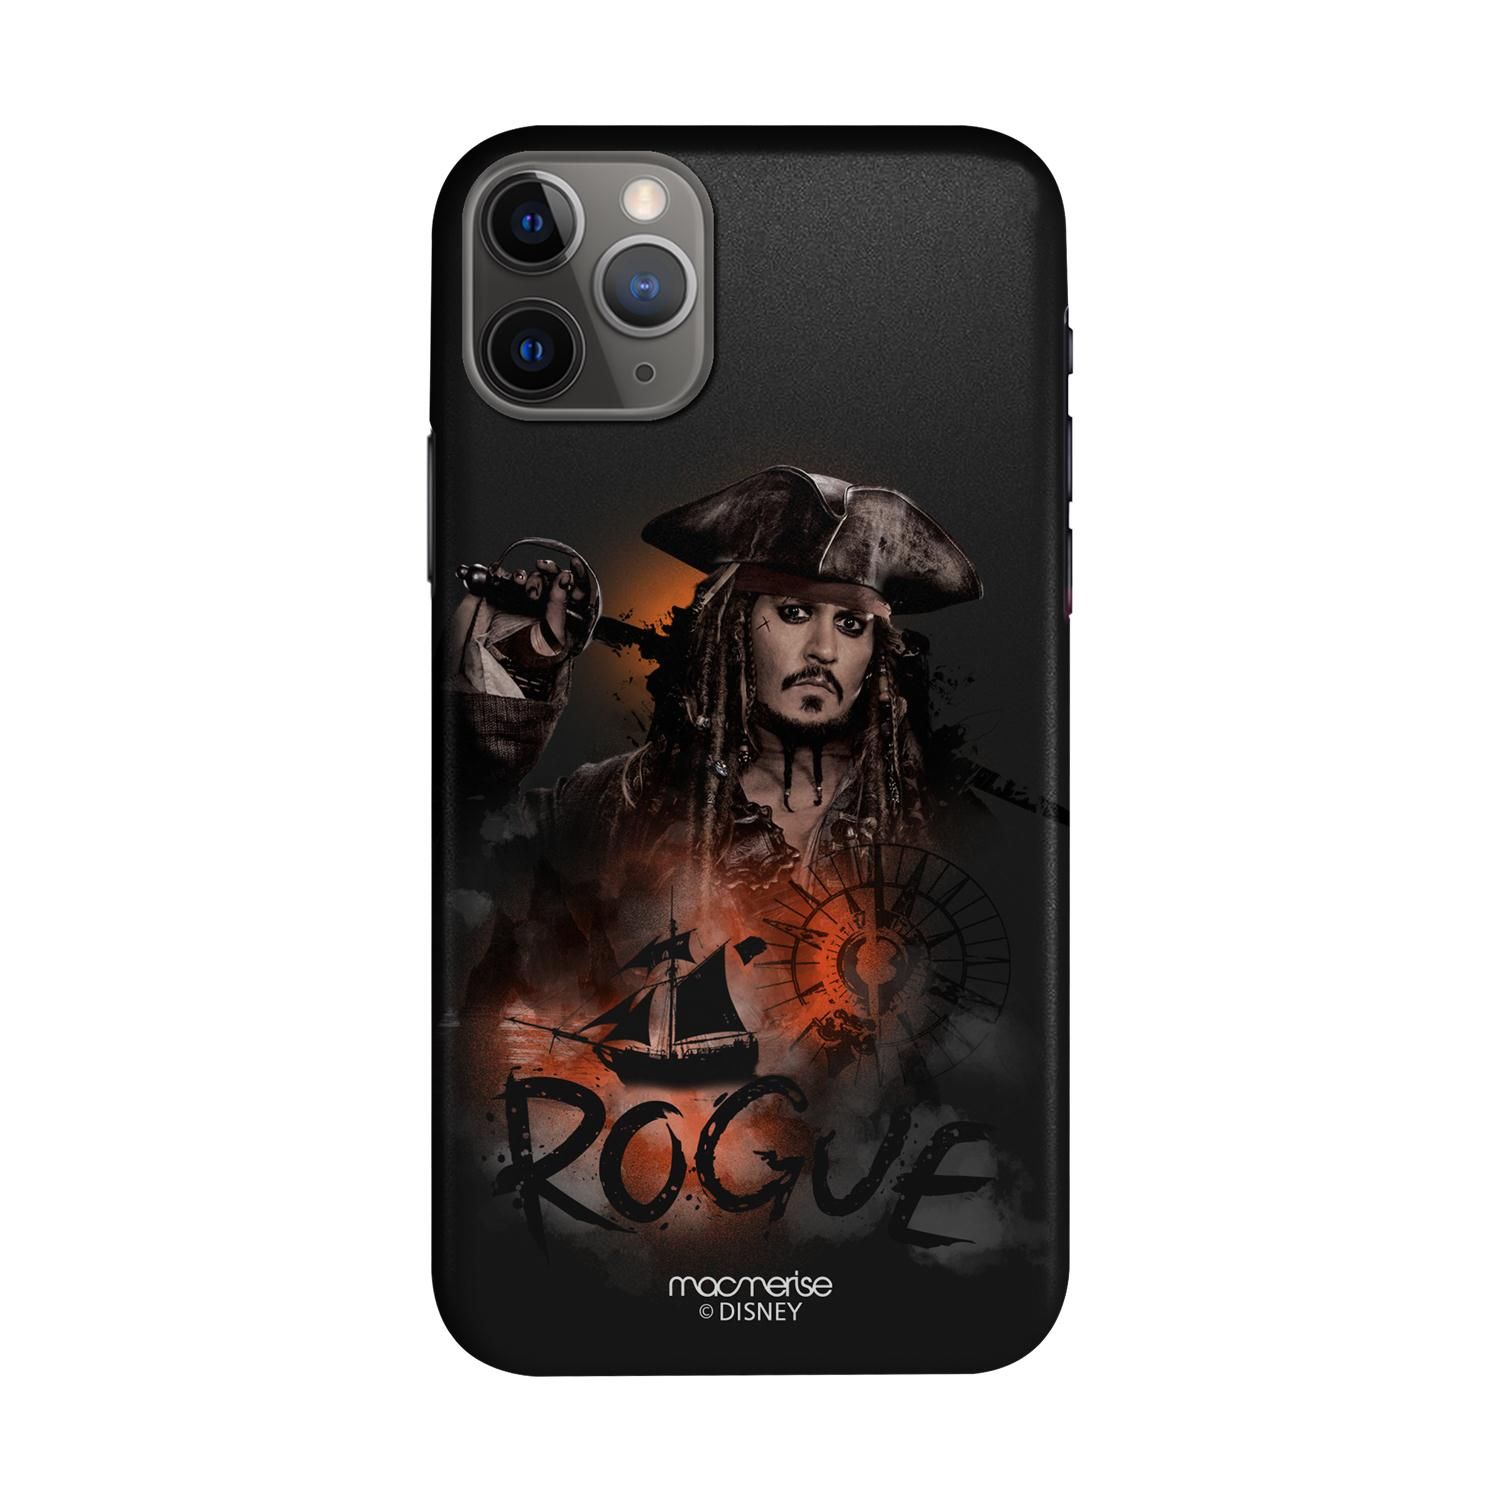 Buy Rogue Jack - Sleek Phone Case for iPhone 11 Pro Online